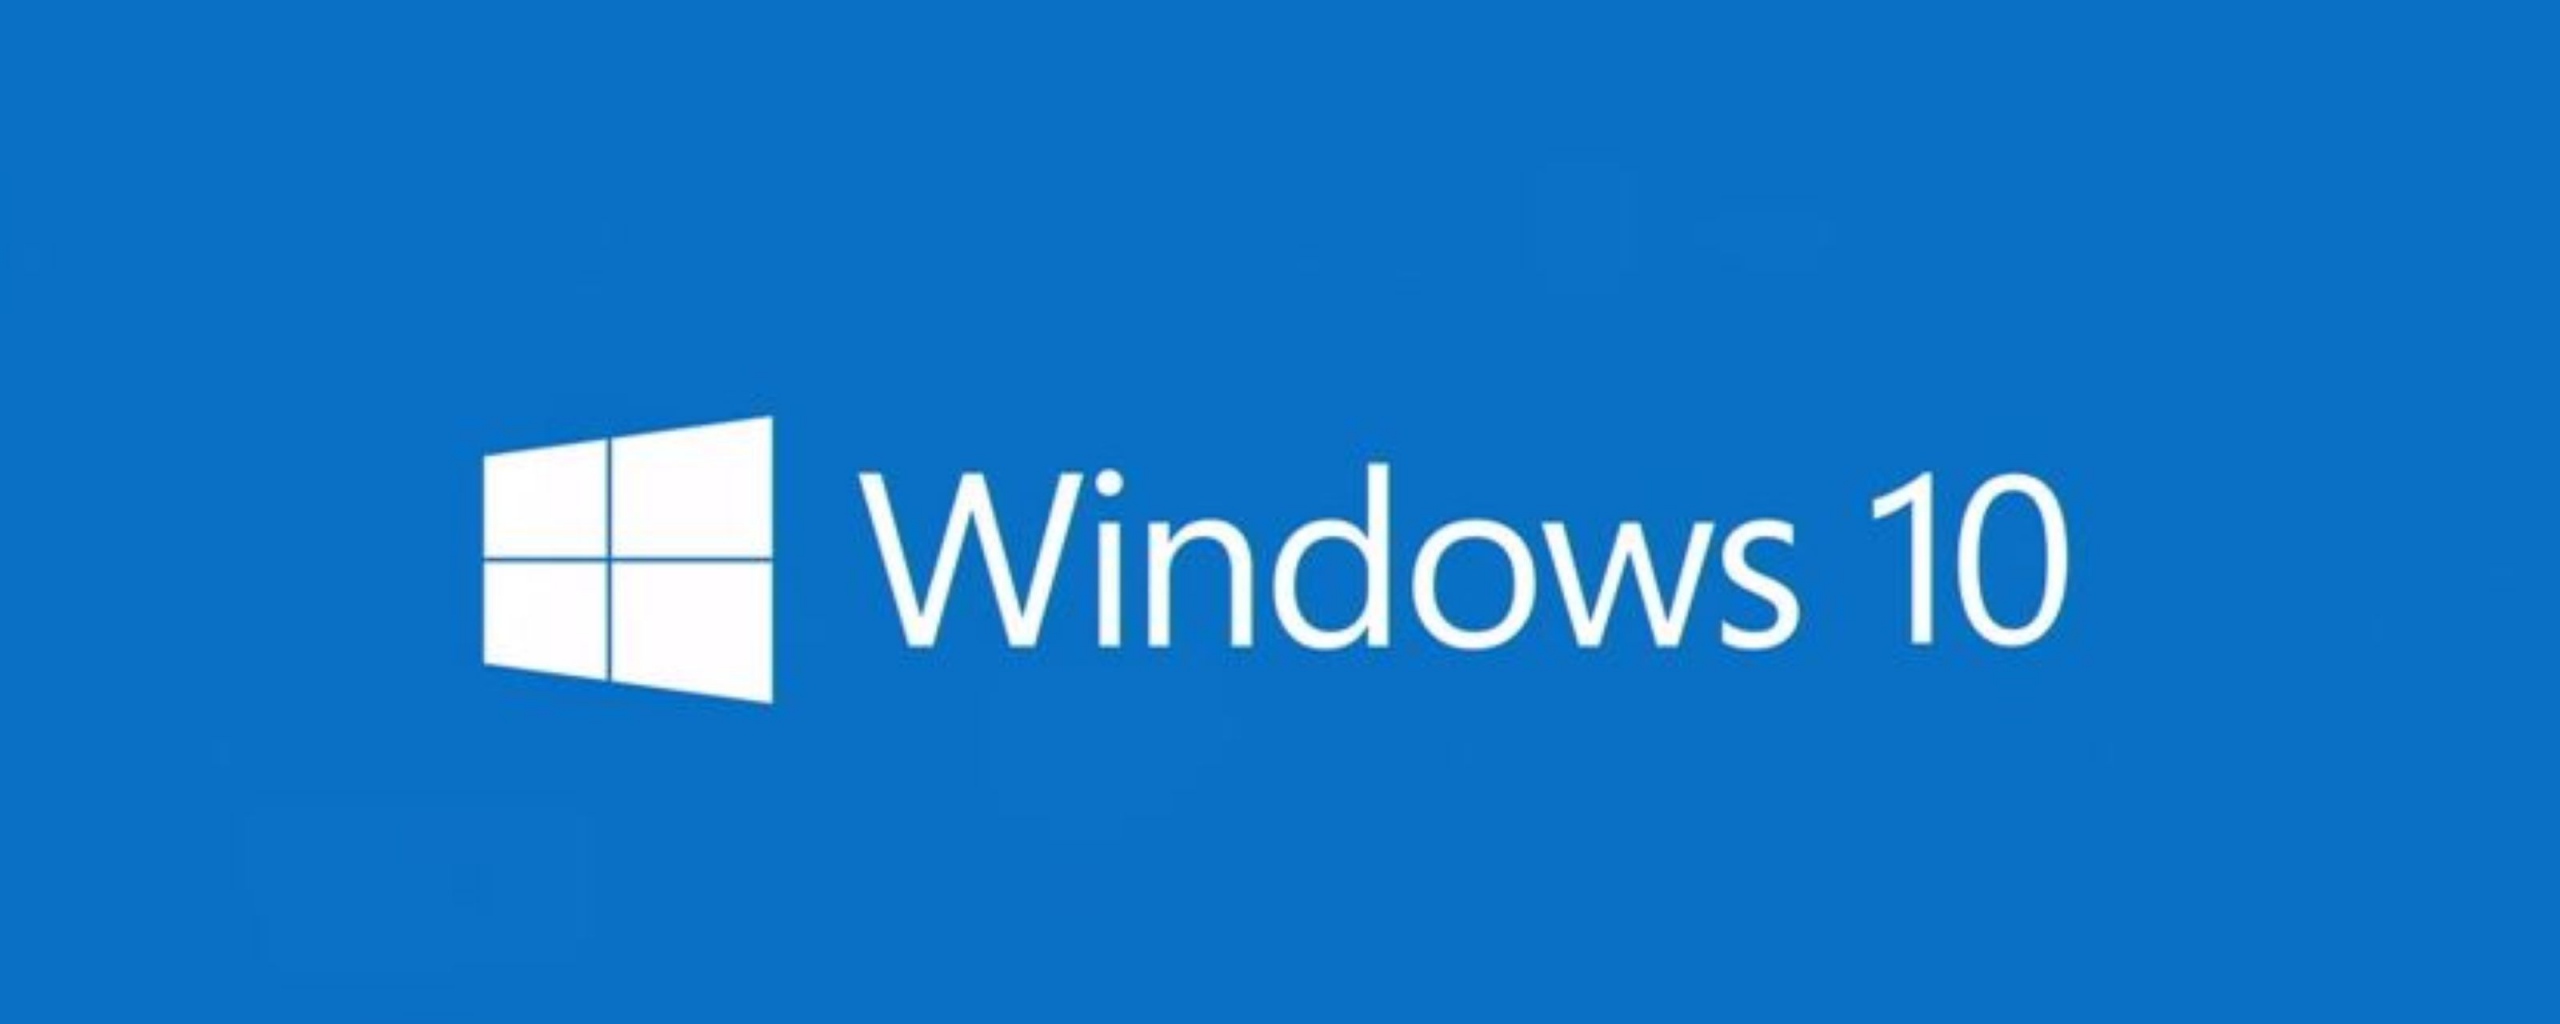 2560x1024 Wallpaper windows 10 technical preview windows 10 logo 2560x1024